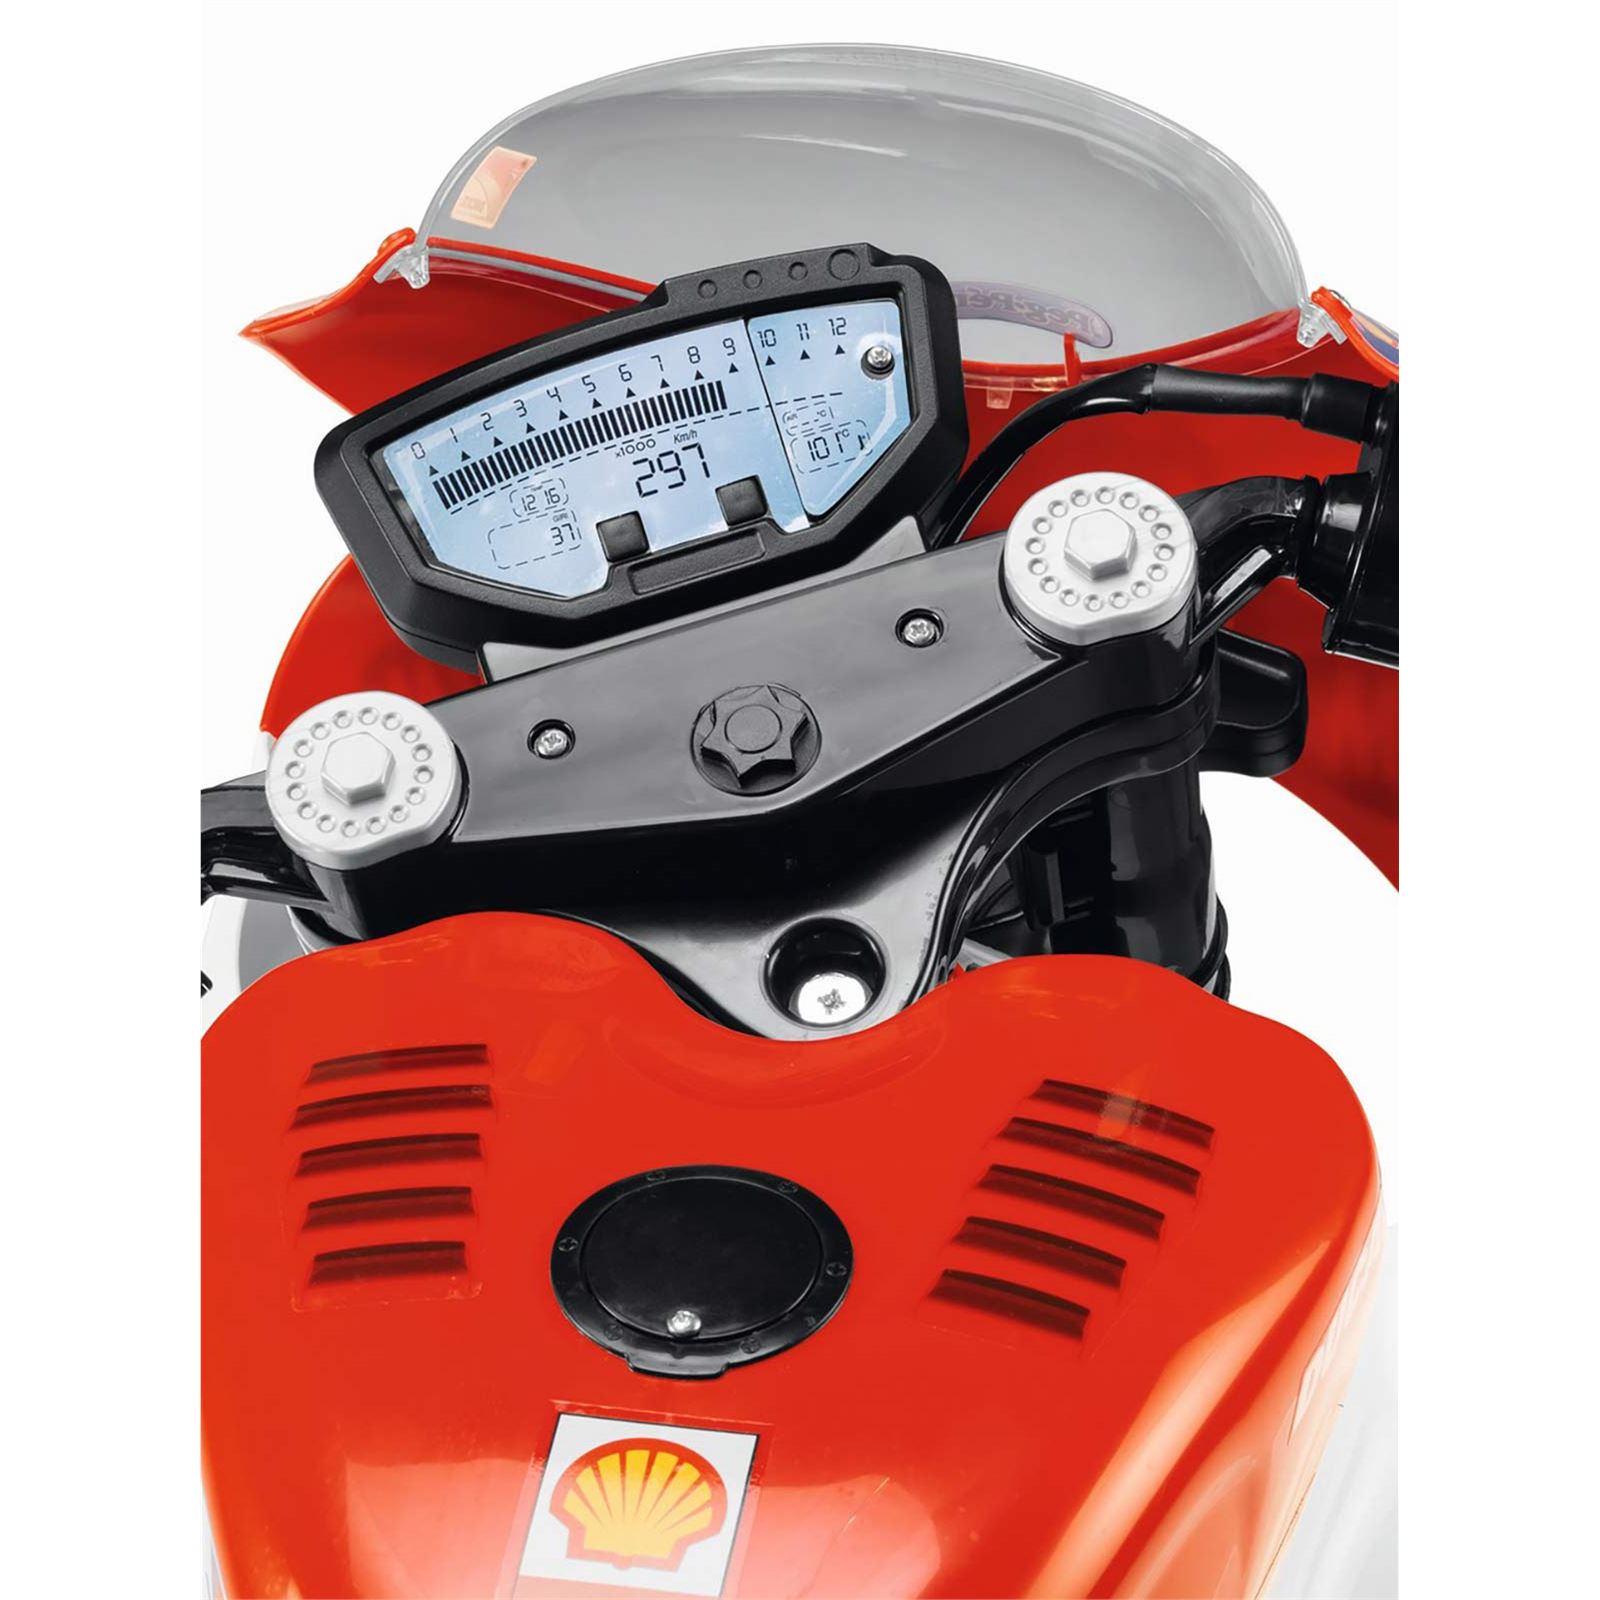 Peg Perego Ducatı Gp 2014 Akulu Motor